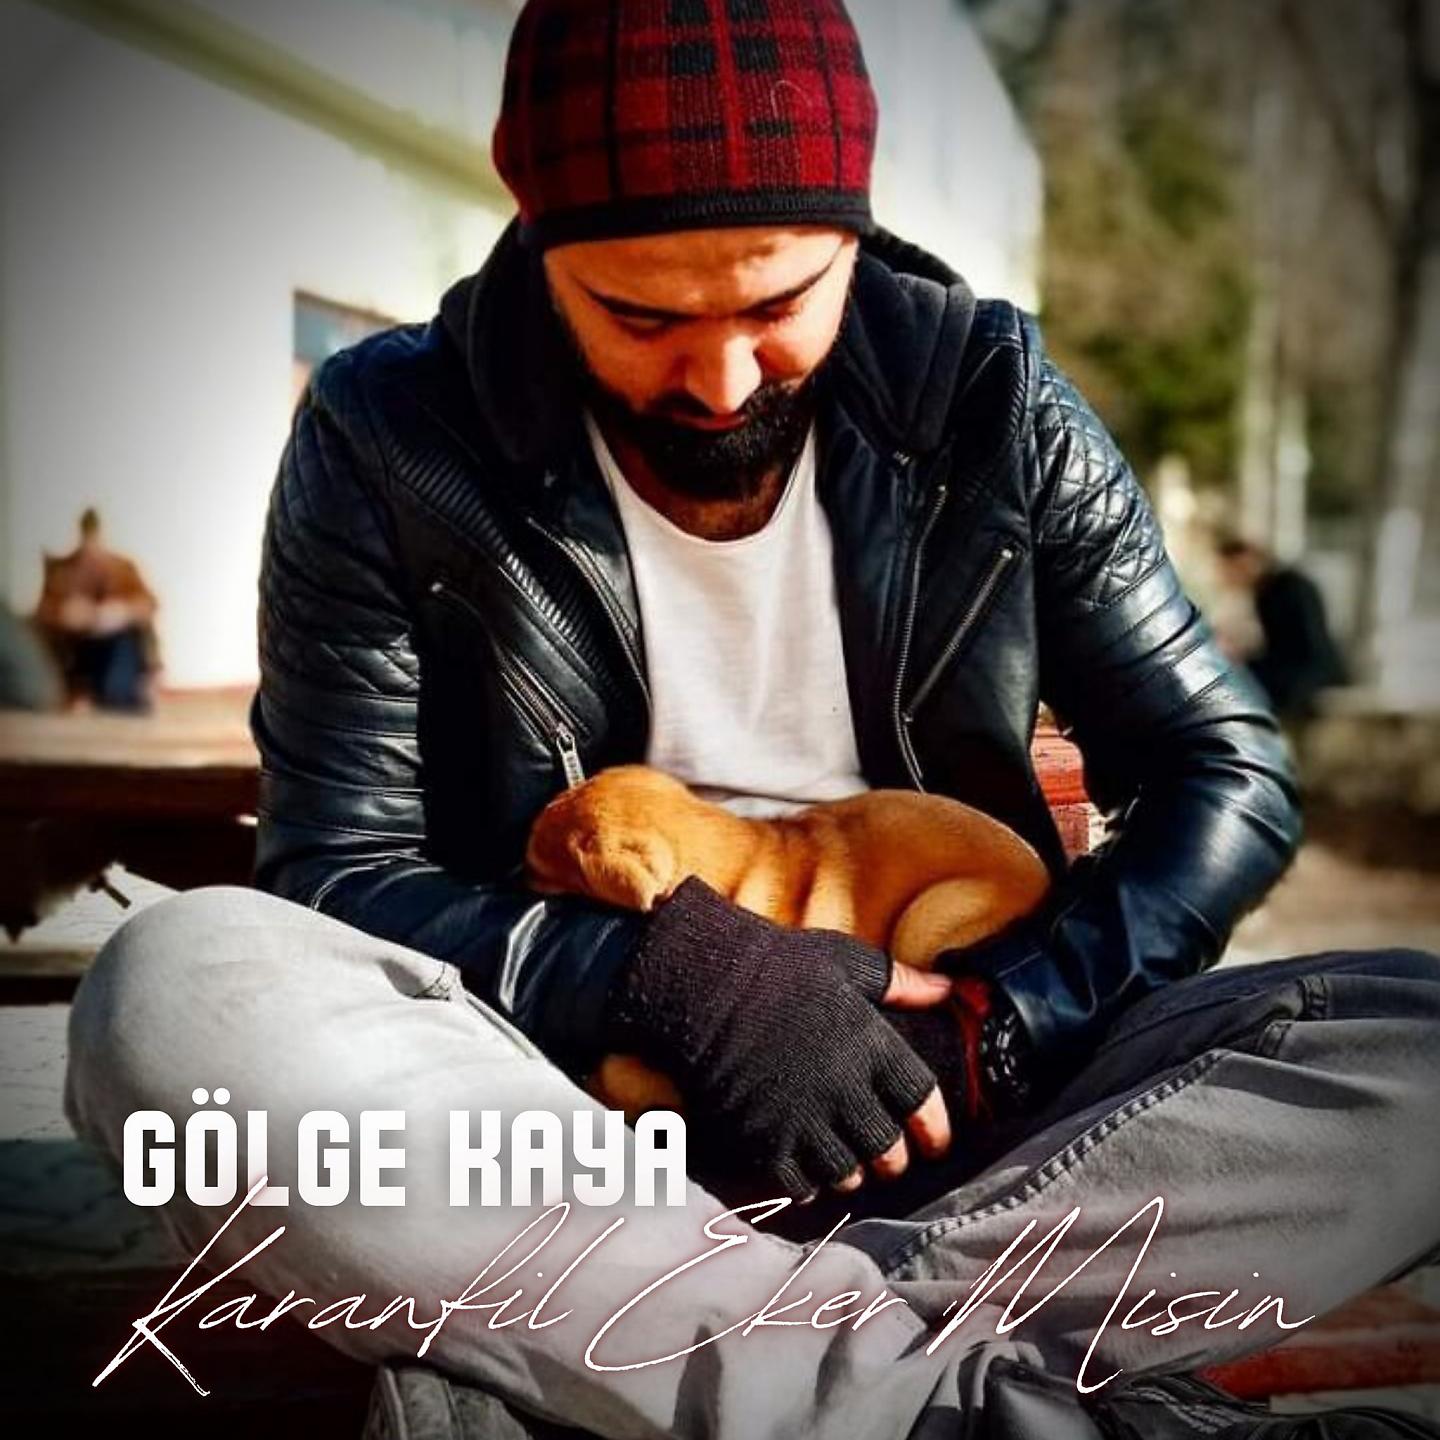 Постер альбома Karanfil Eker Misin